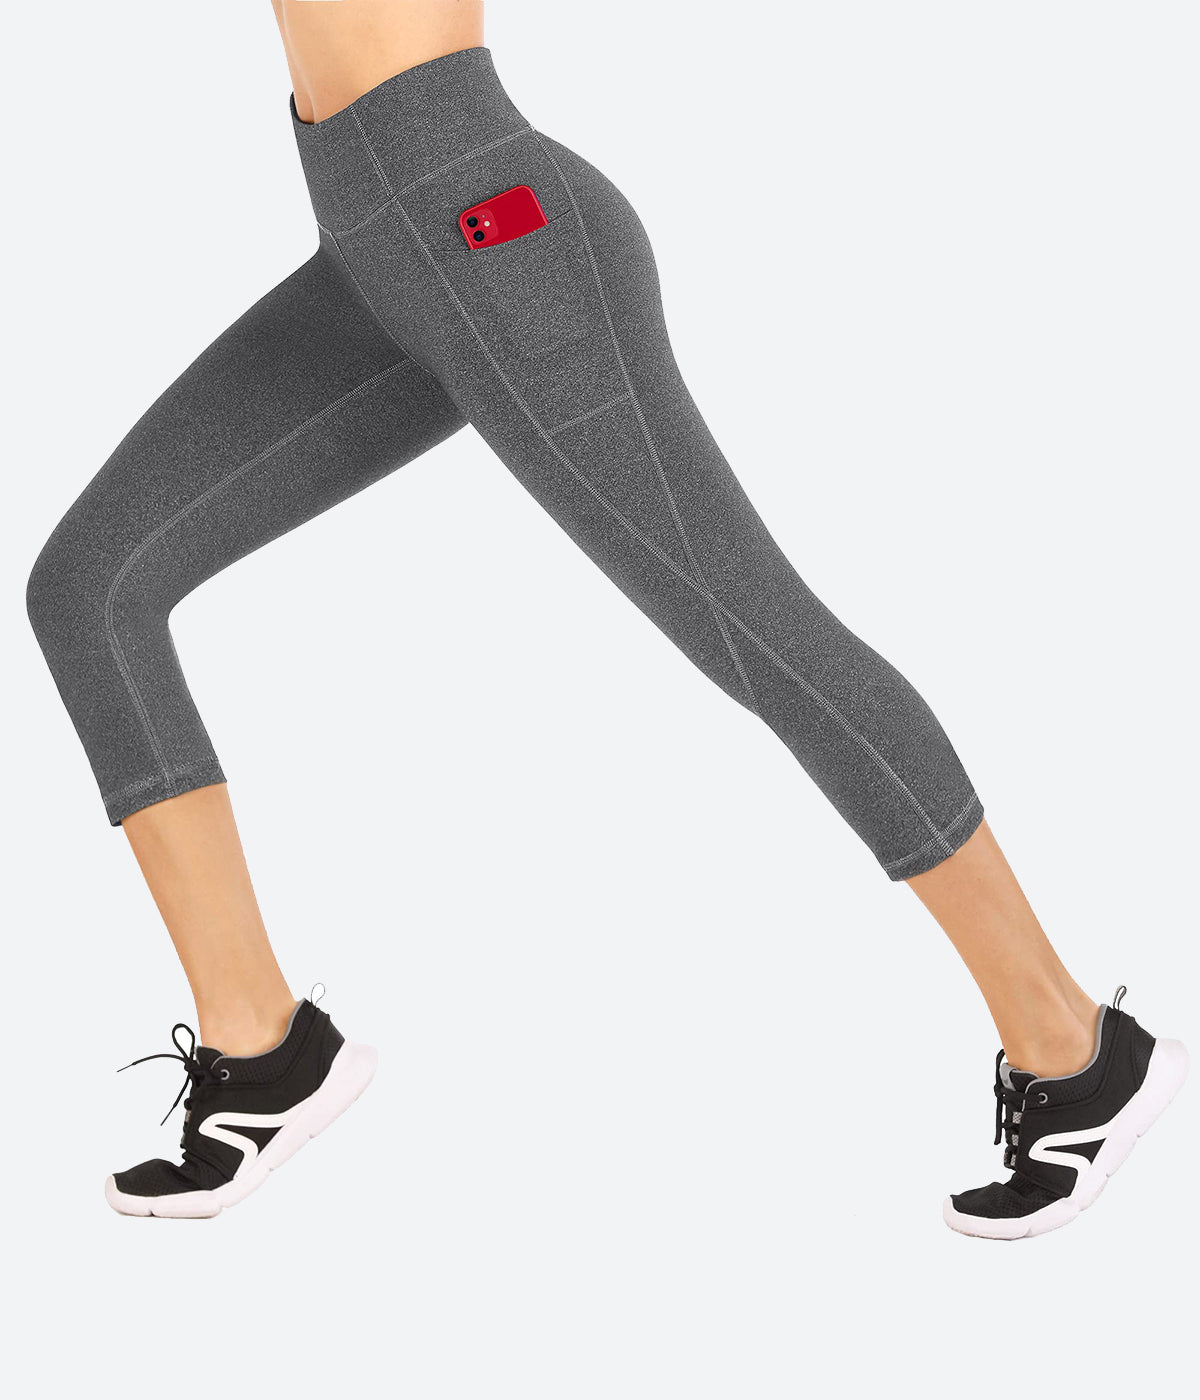 SALE! Silver Grey Cassi Side Pockets Workout Leggings Yoga